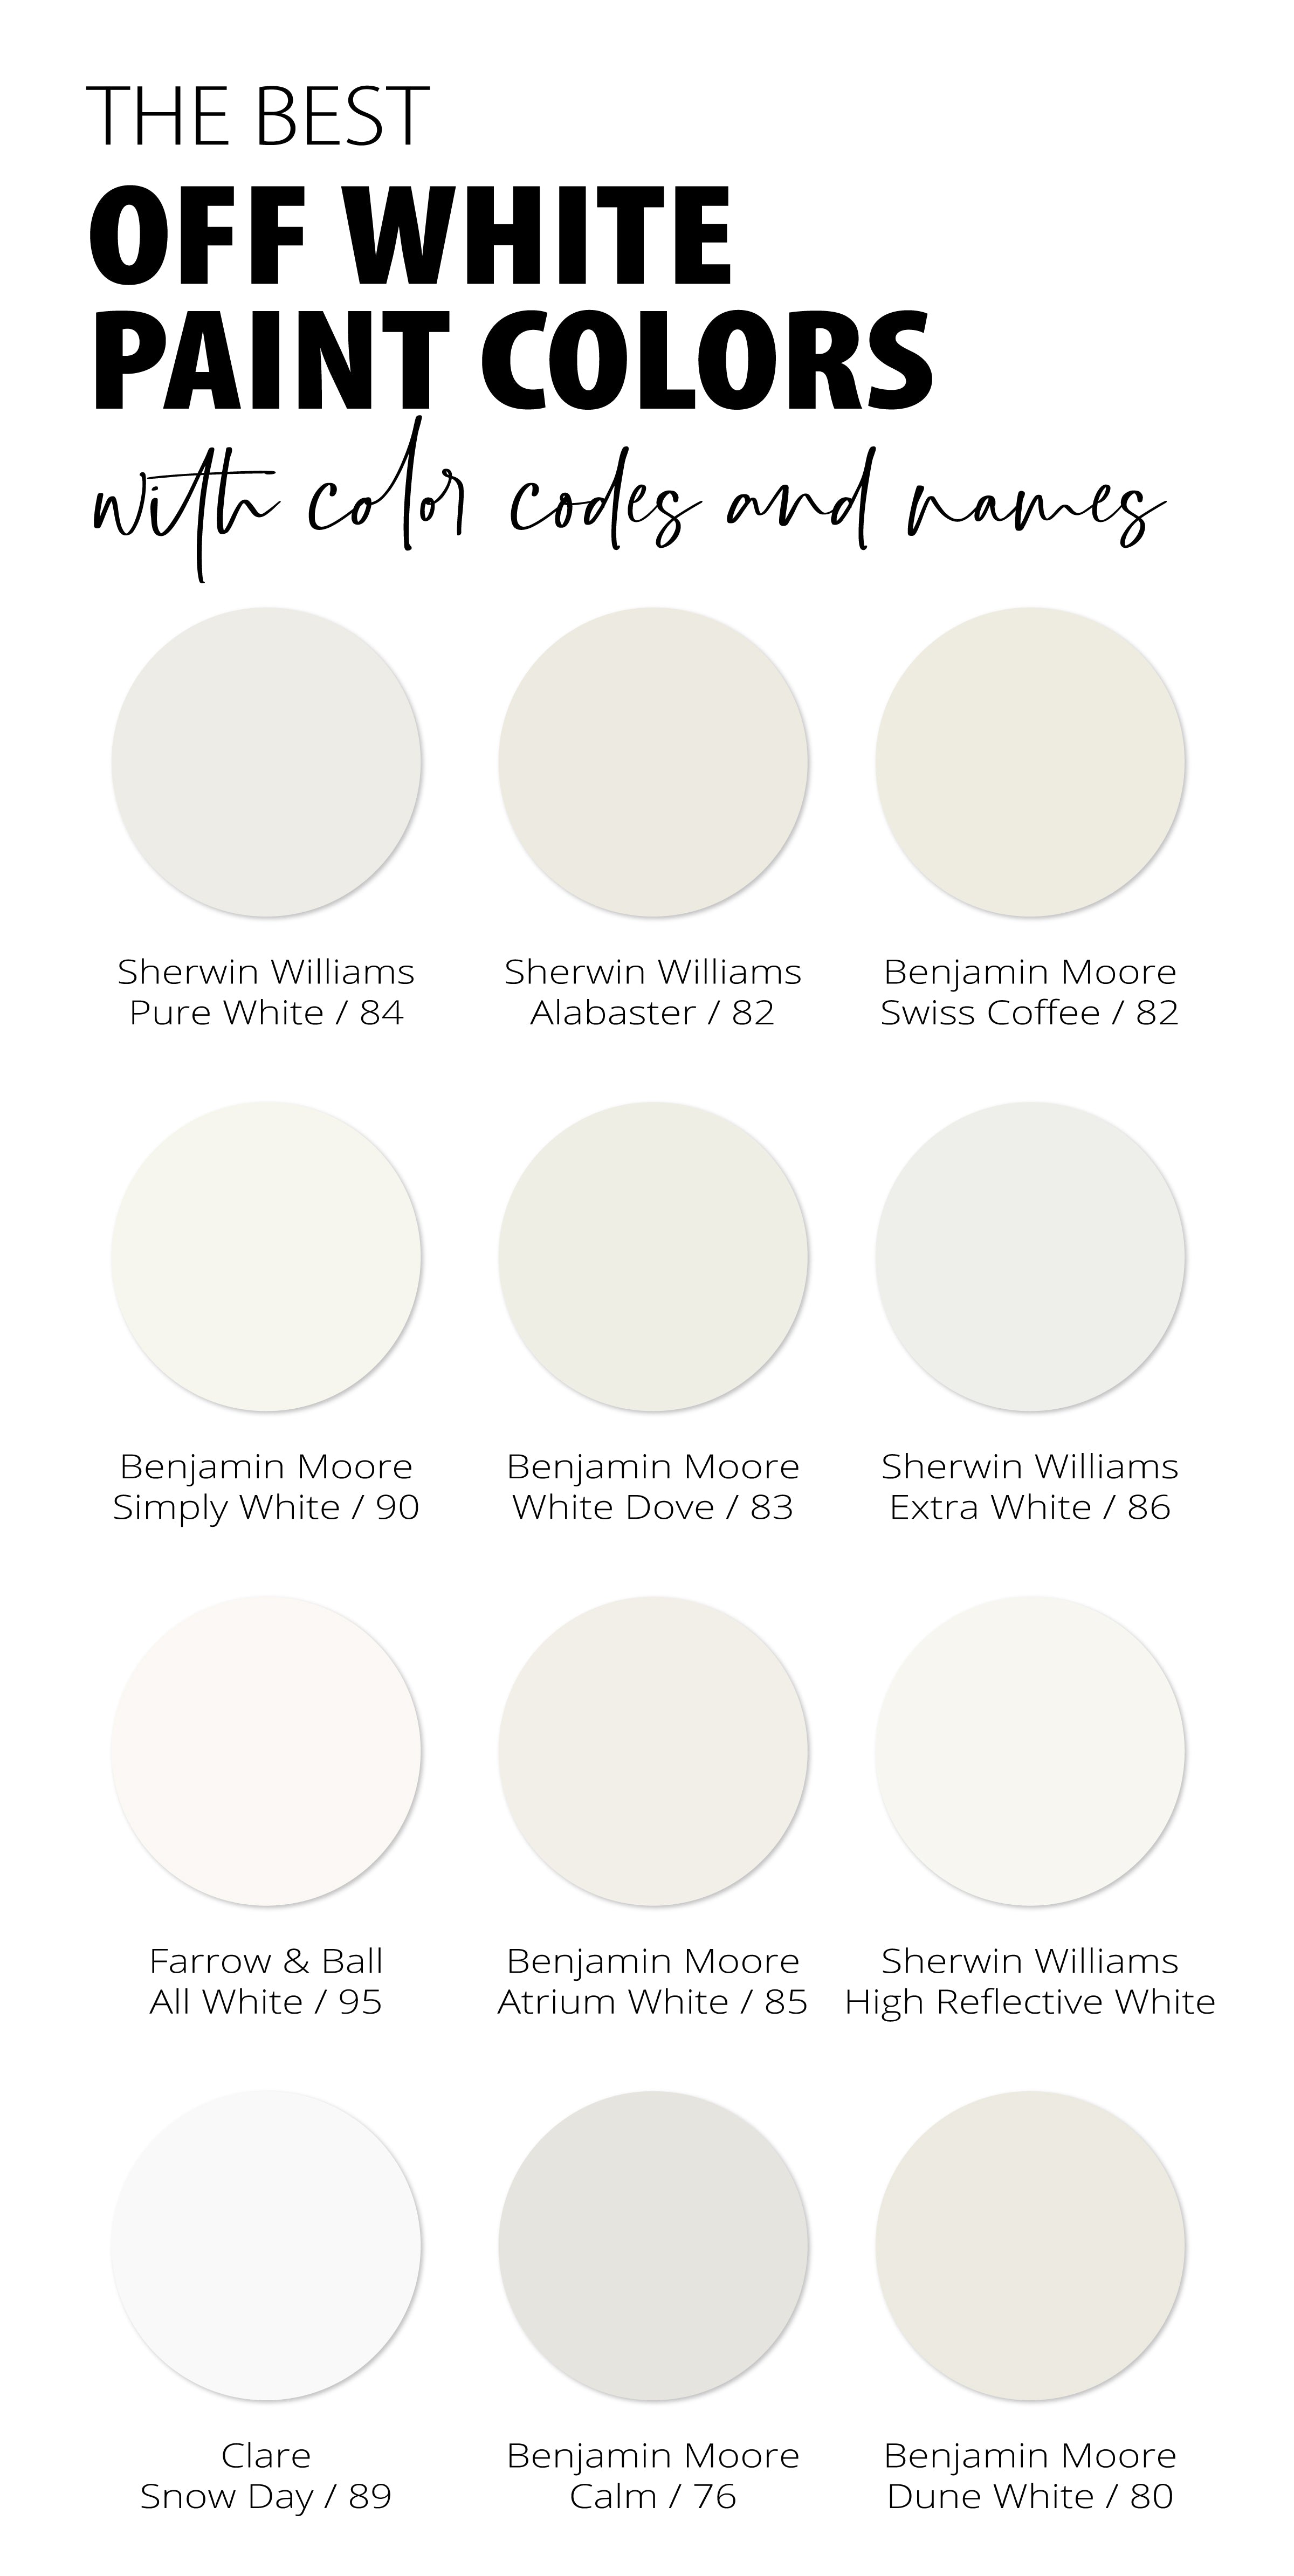 The 10 Best White Paint Colors